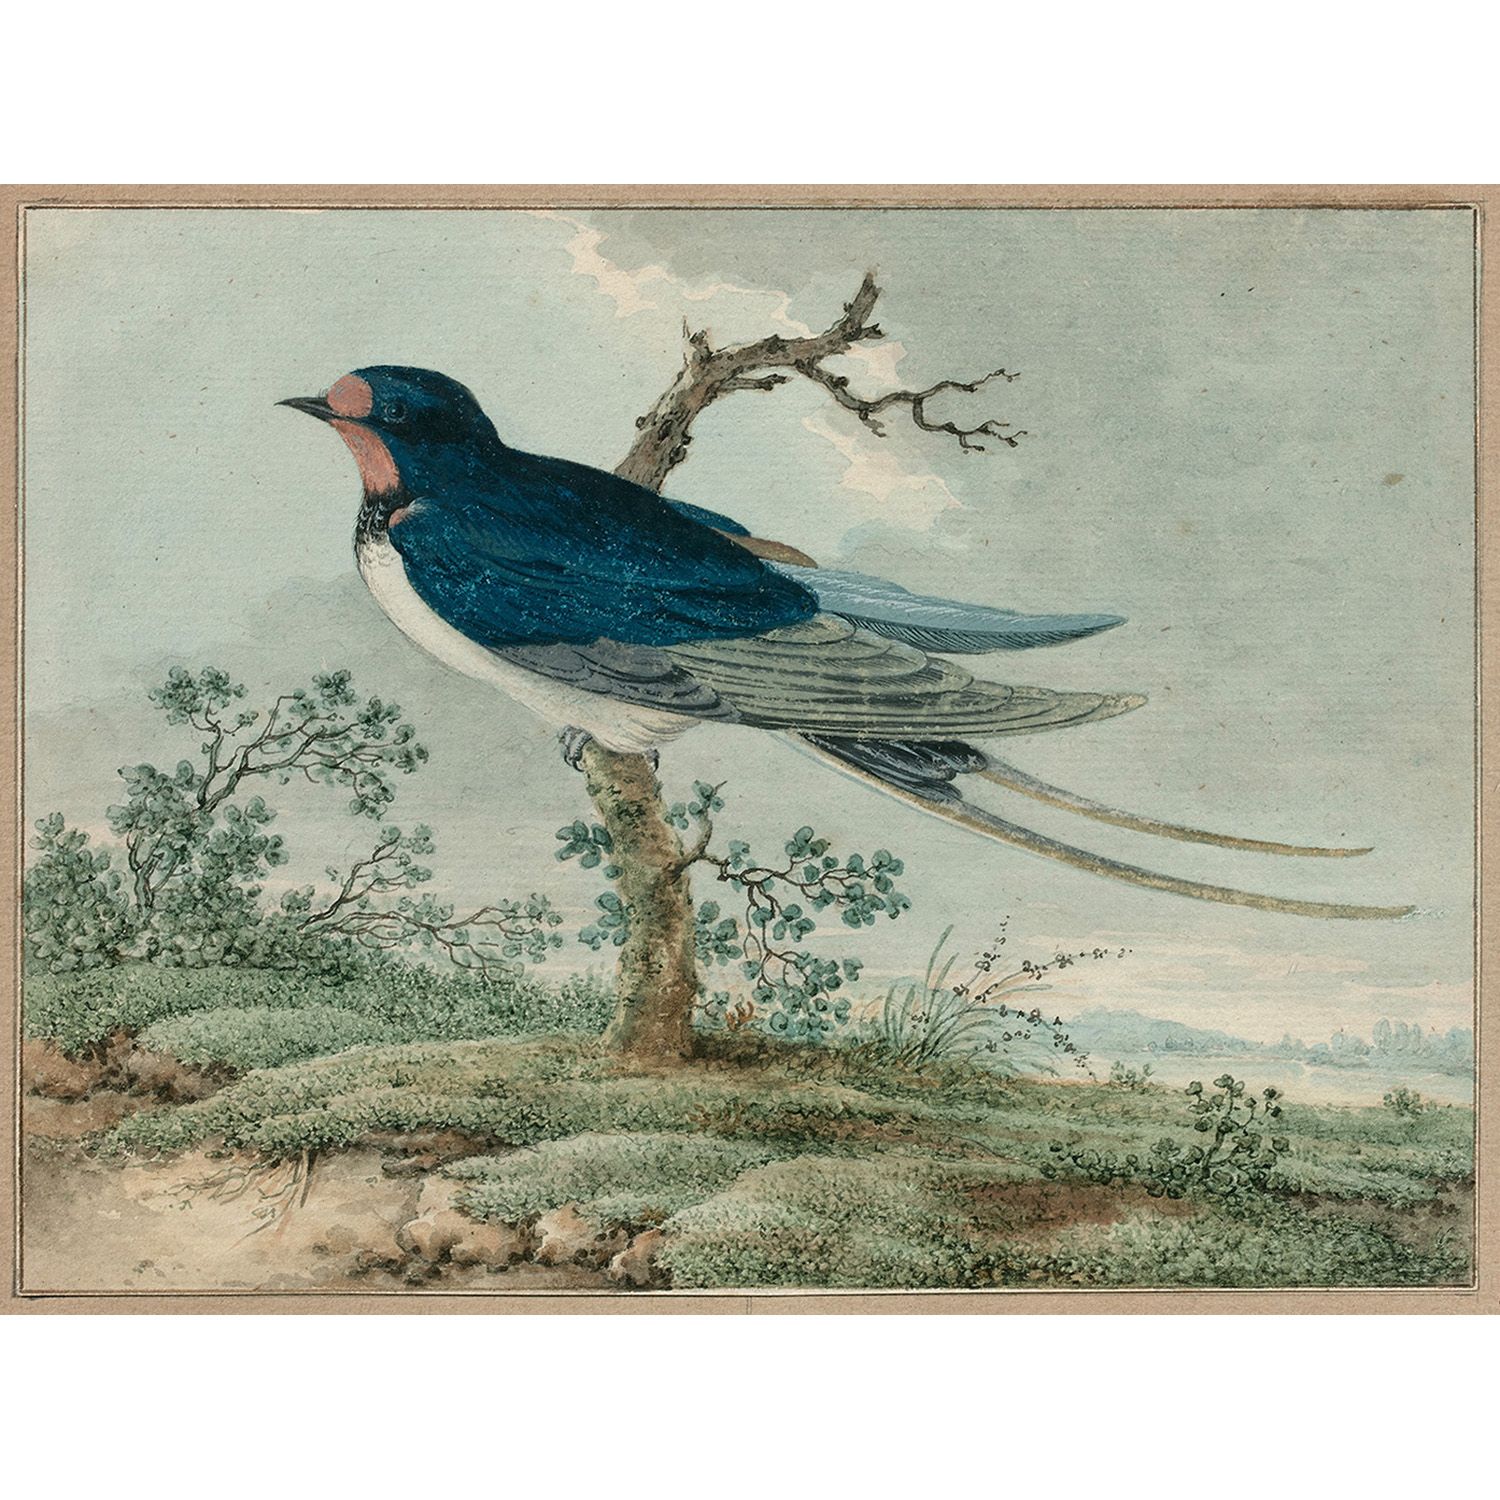 Null GERARD VAN VEEN (active in Holland ca. 1620-1683)
A chimney swallow, called&hellip;